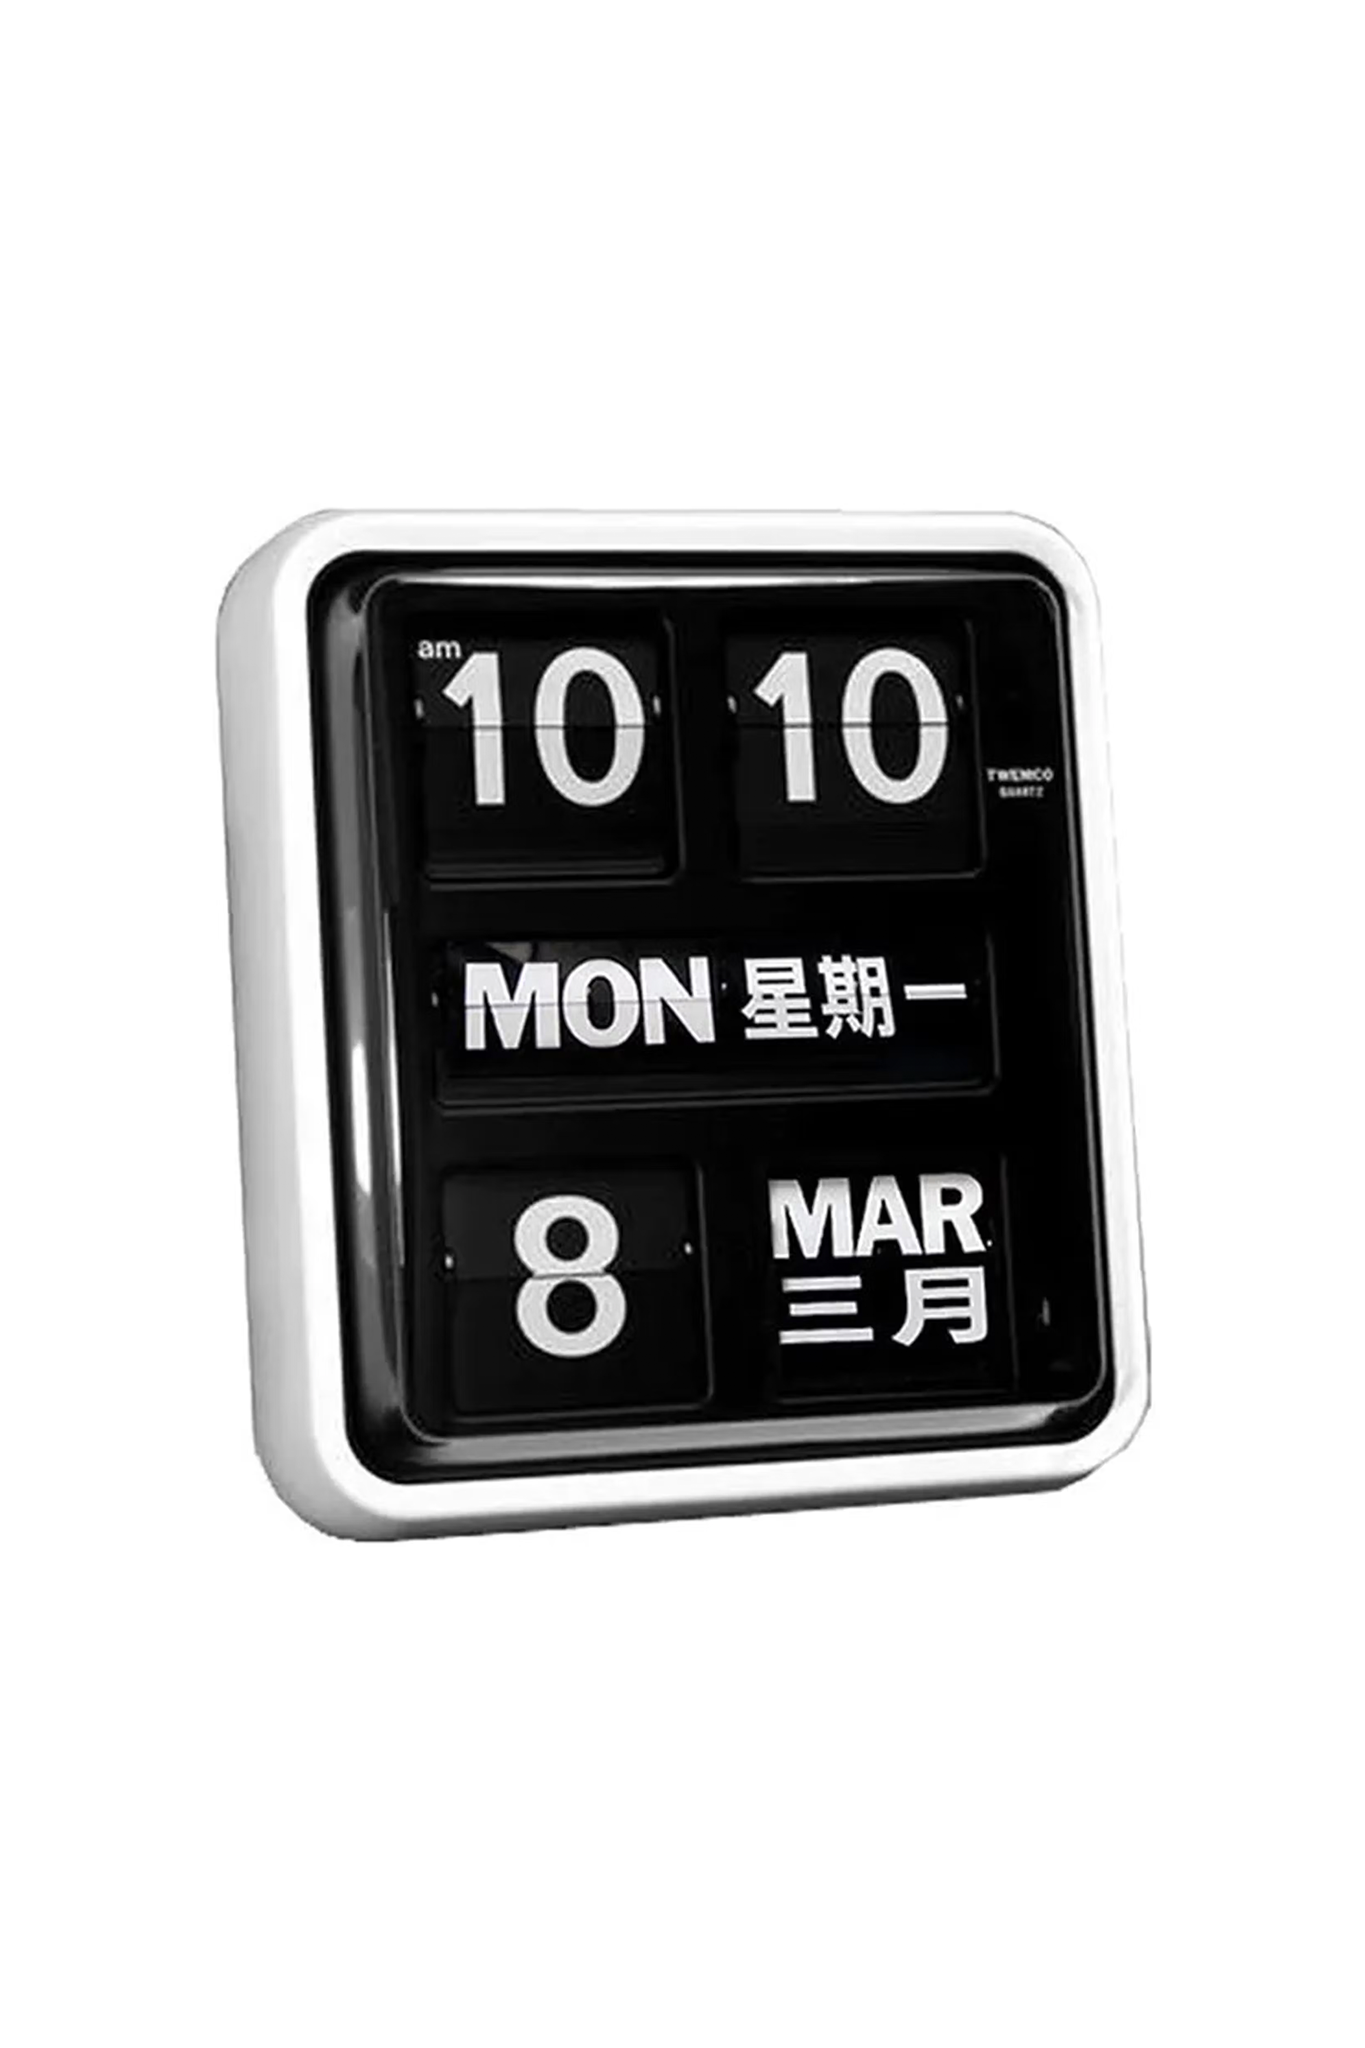 TWEMCO Calendar Wall Flip Clock BQ-1700 (PRE-ORDER)